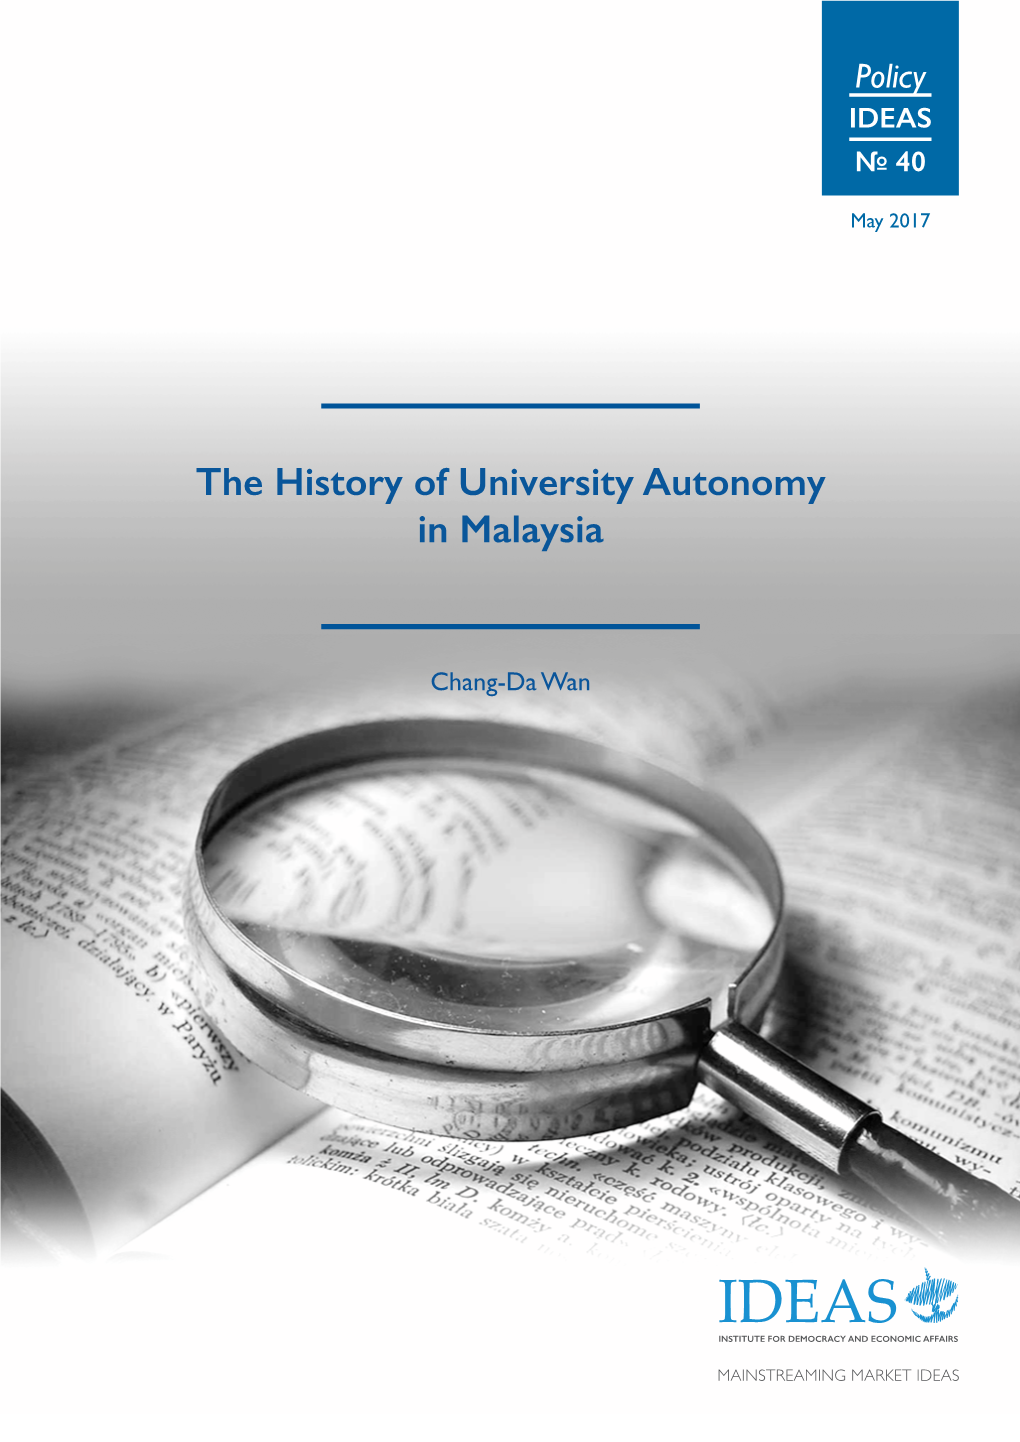 The History of University Autonomy in Malaysia